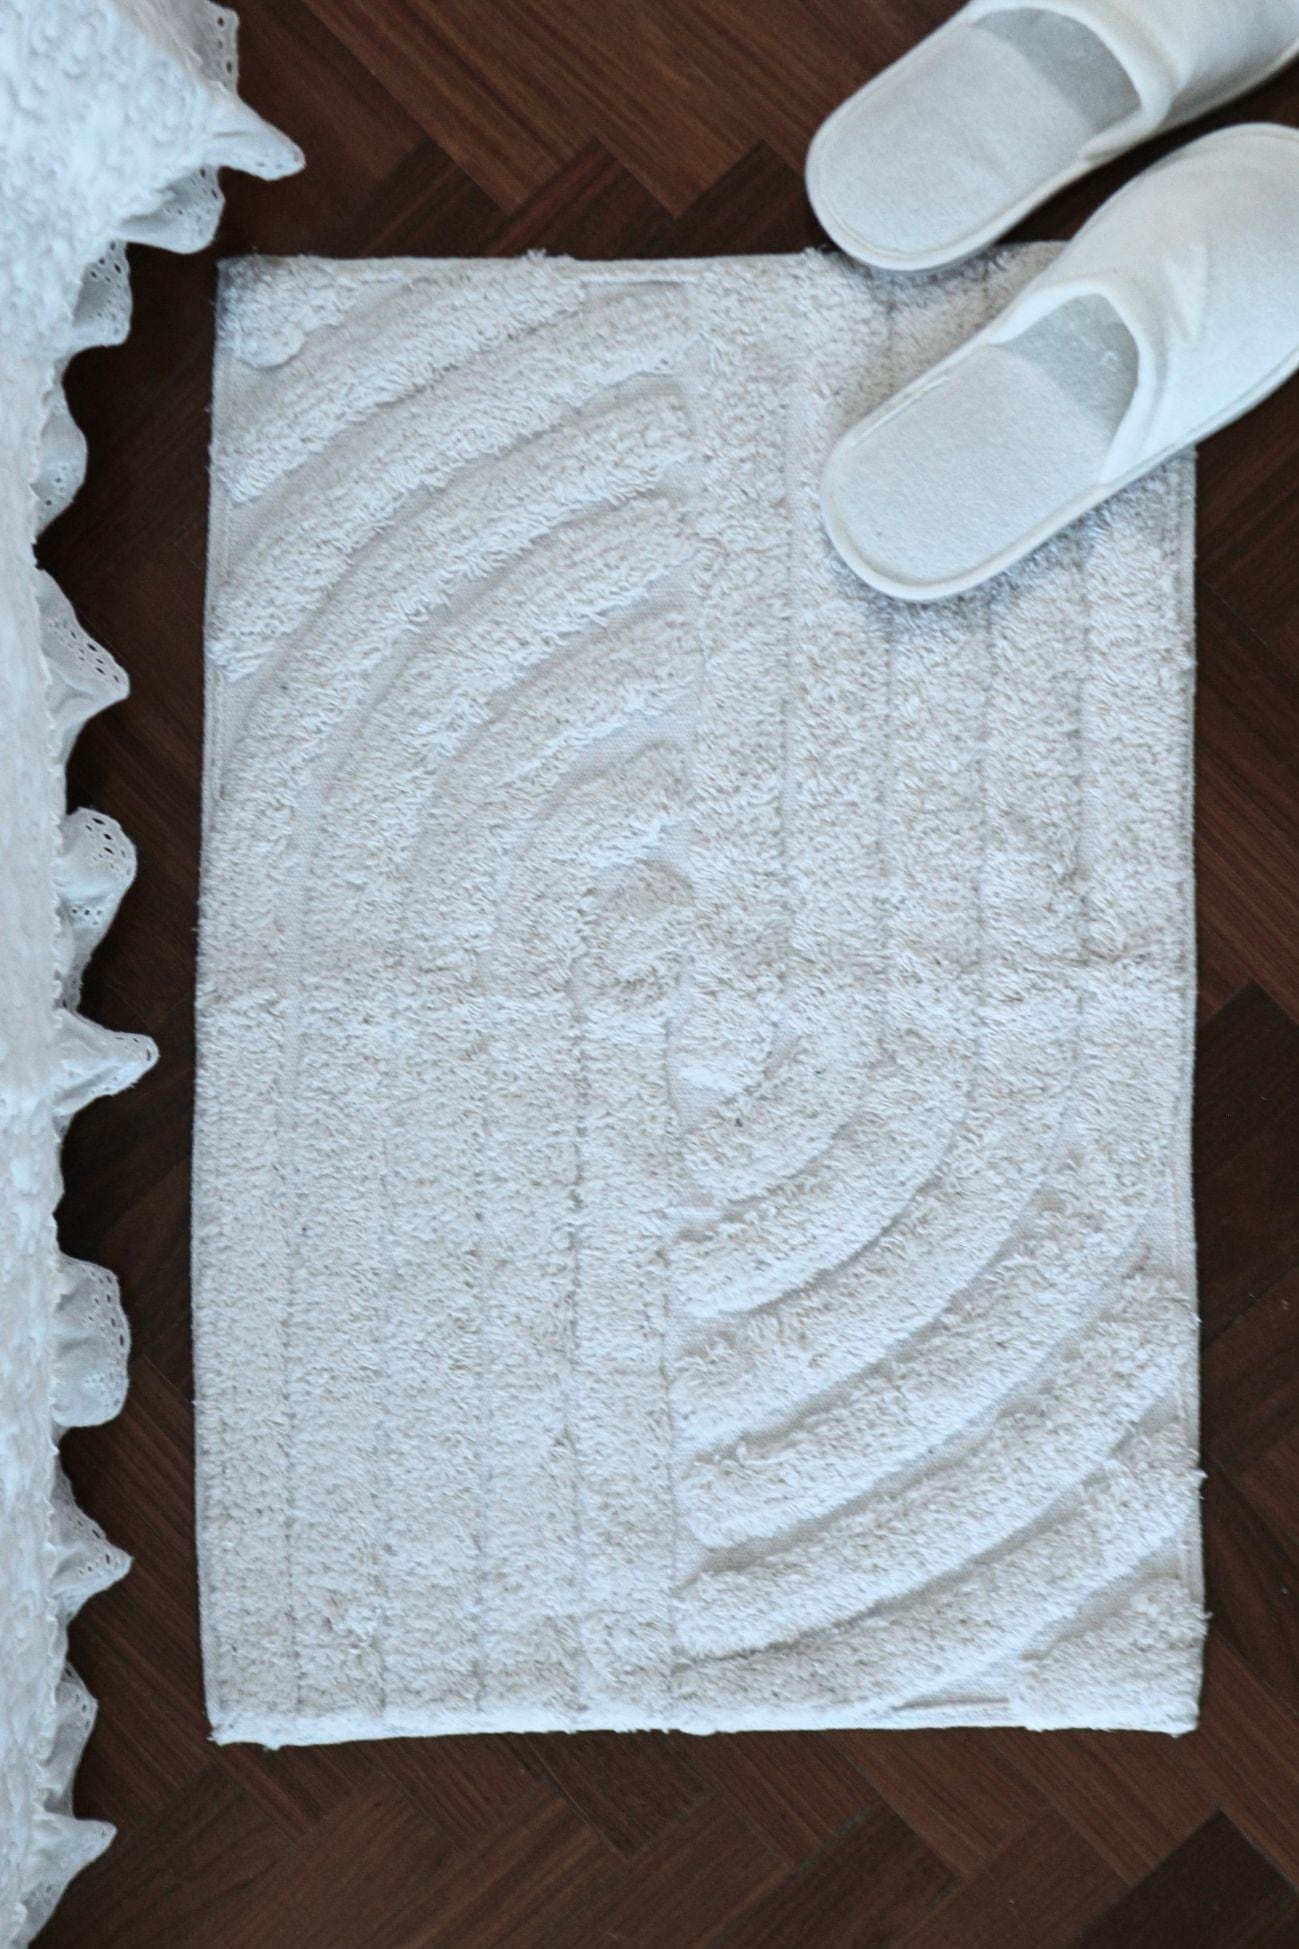 Item International Bode Bode - Tappetino in cotone bianco con motivo geometrico 60x40 | Item International